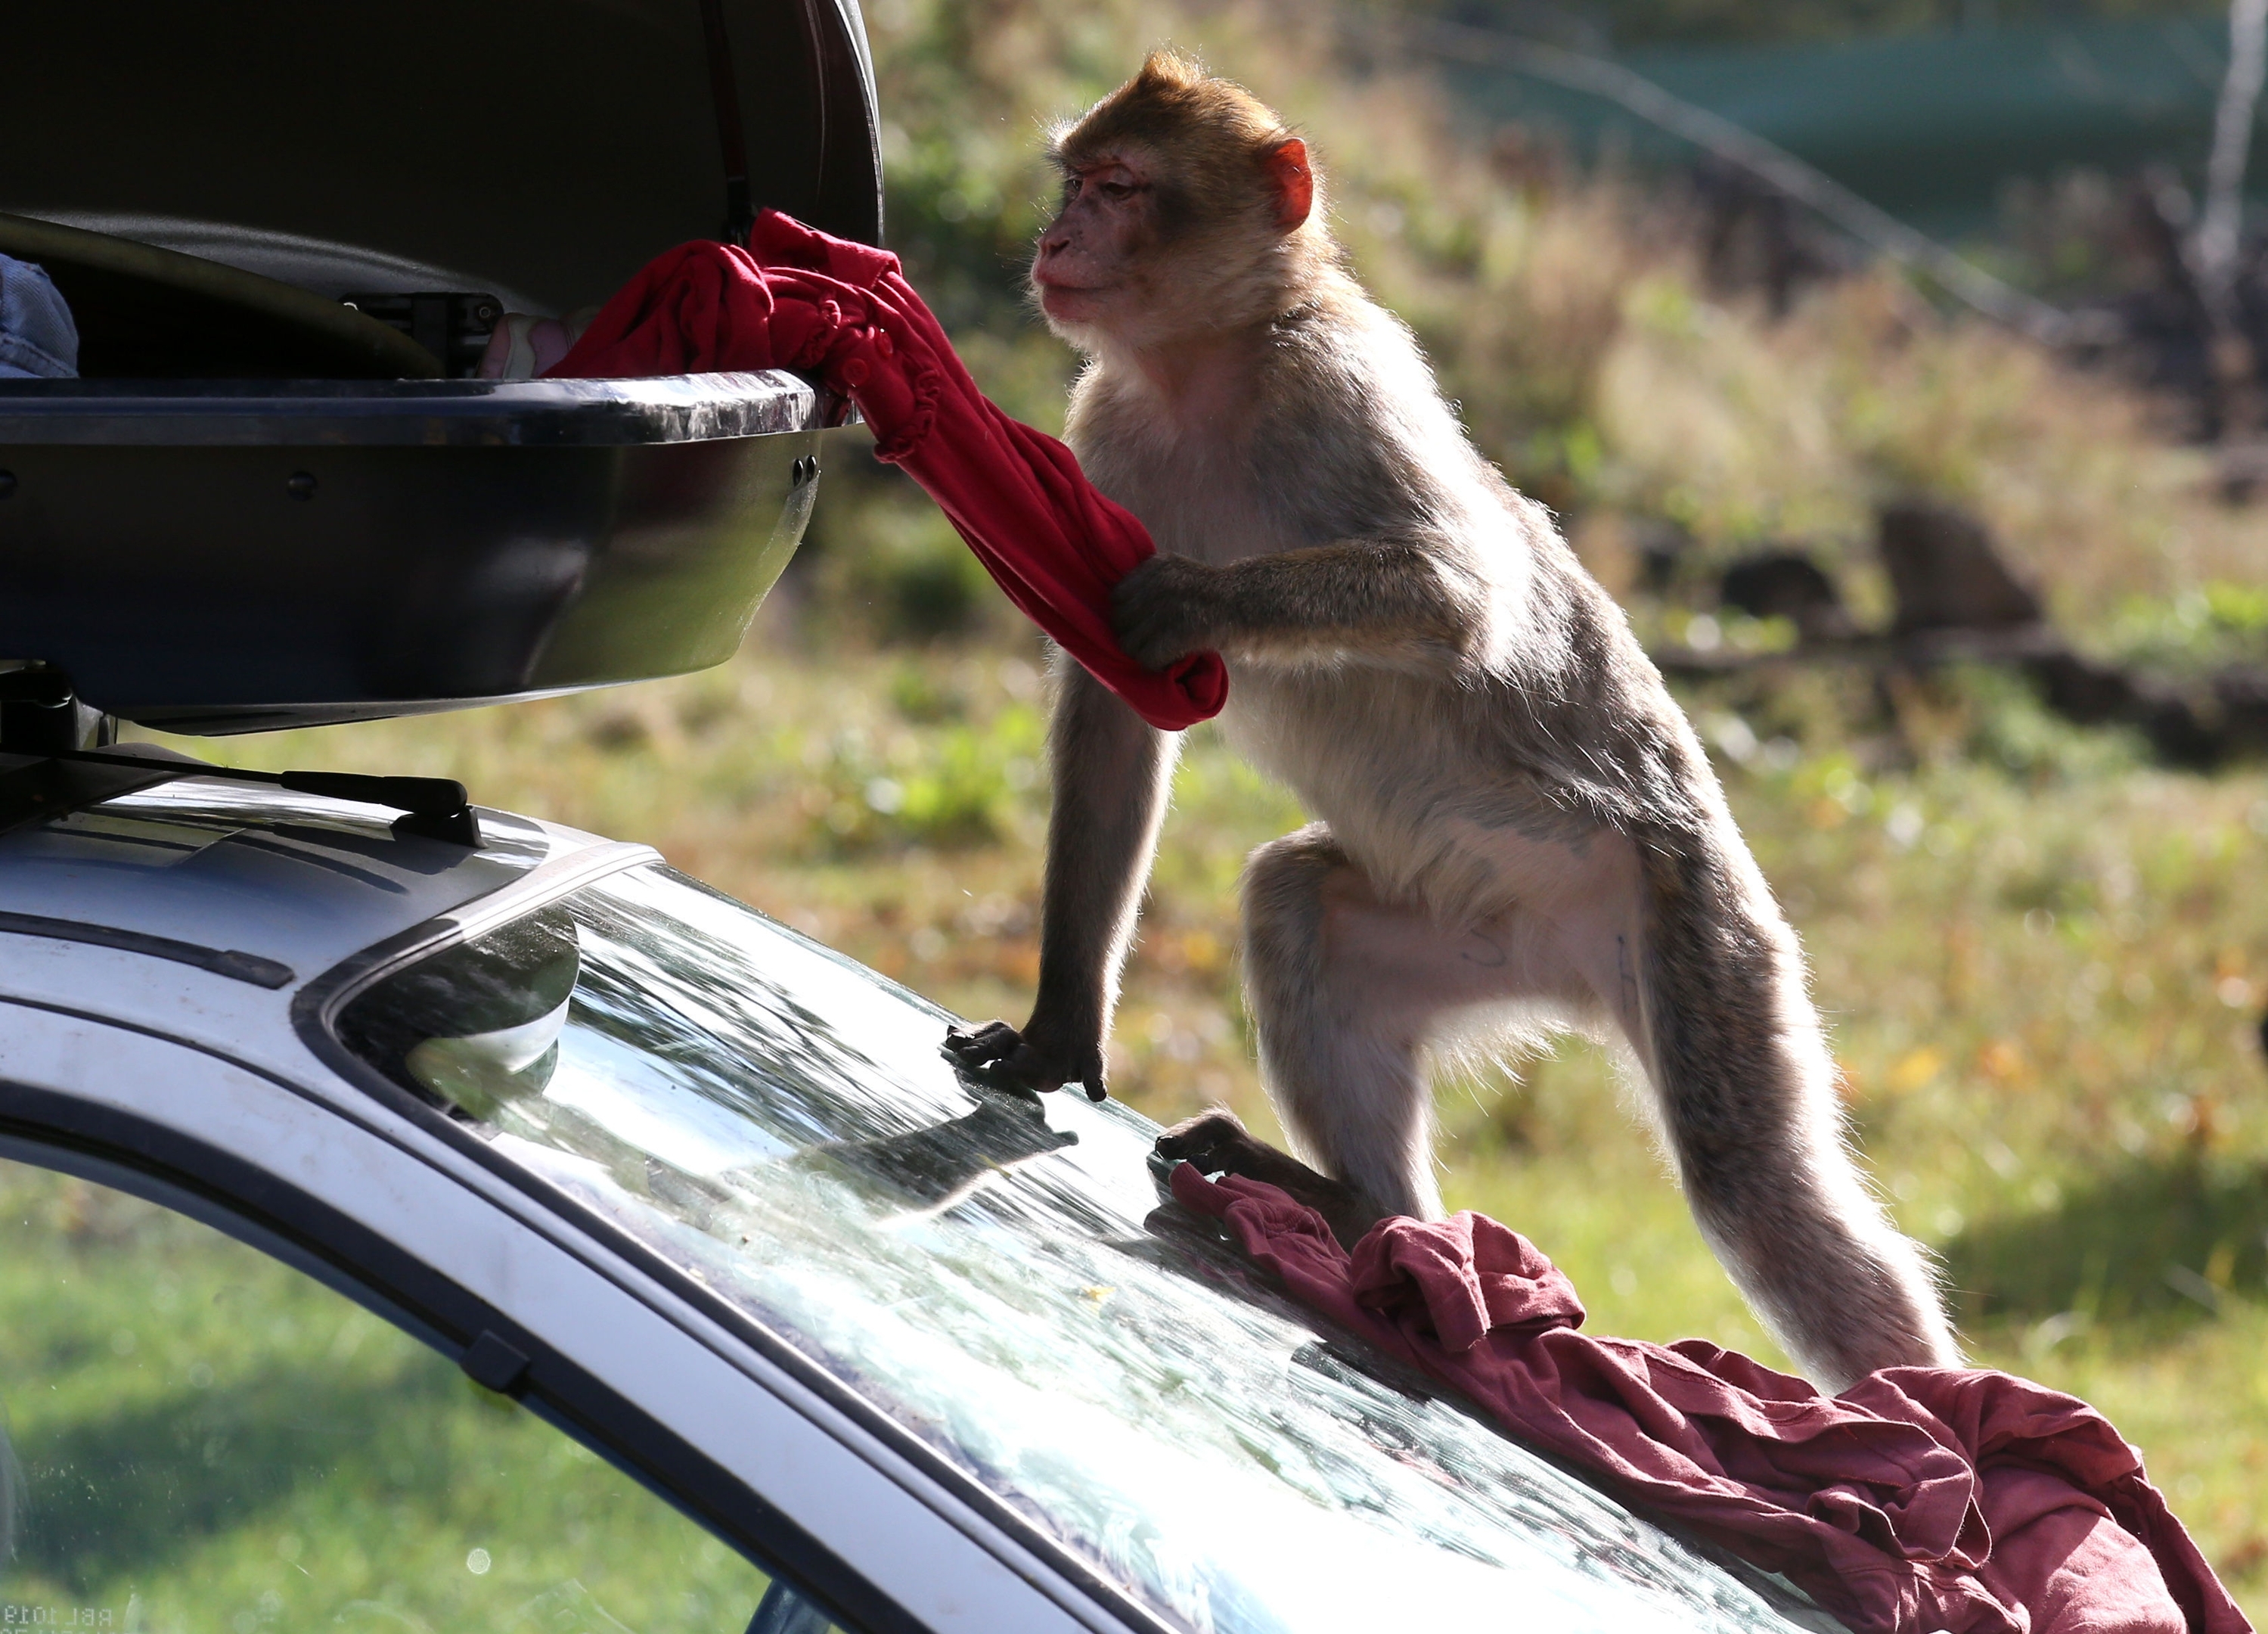 safari park monkeys wreck car